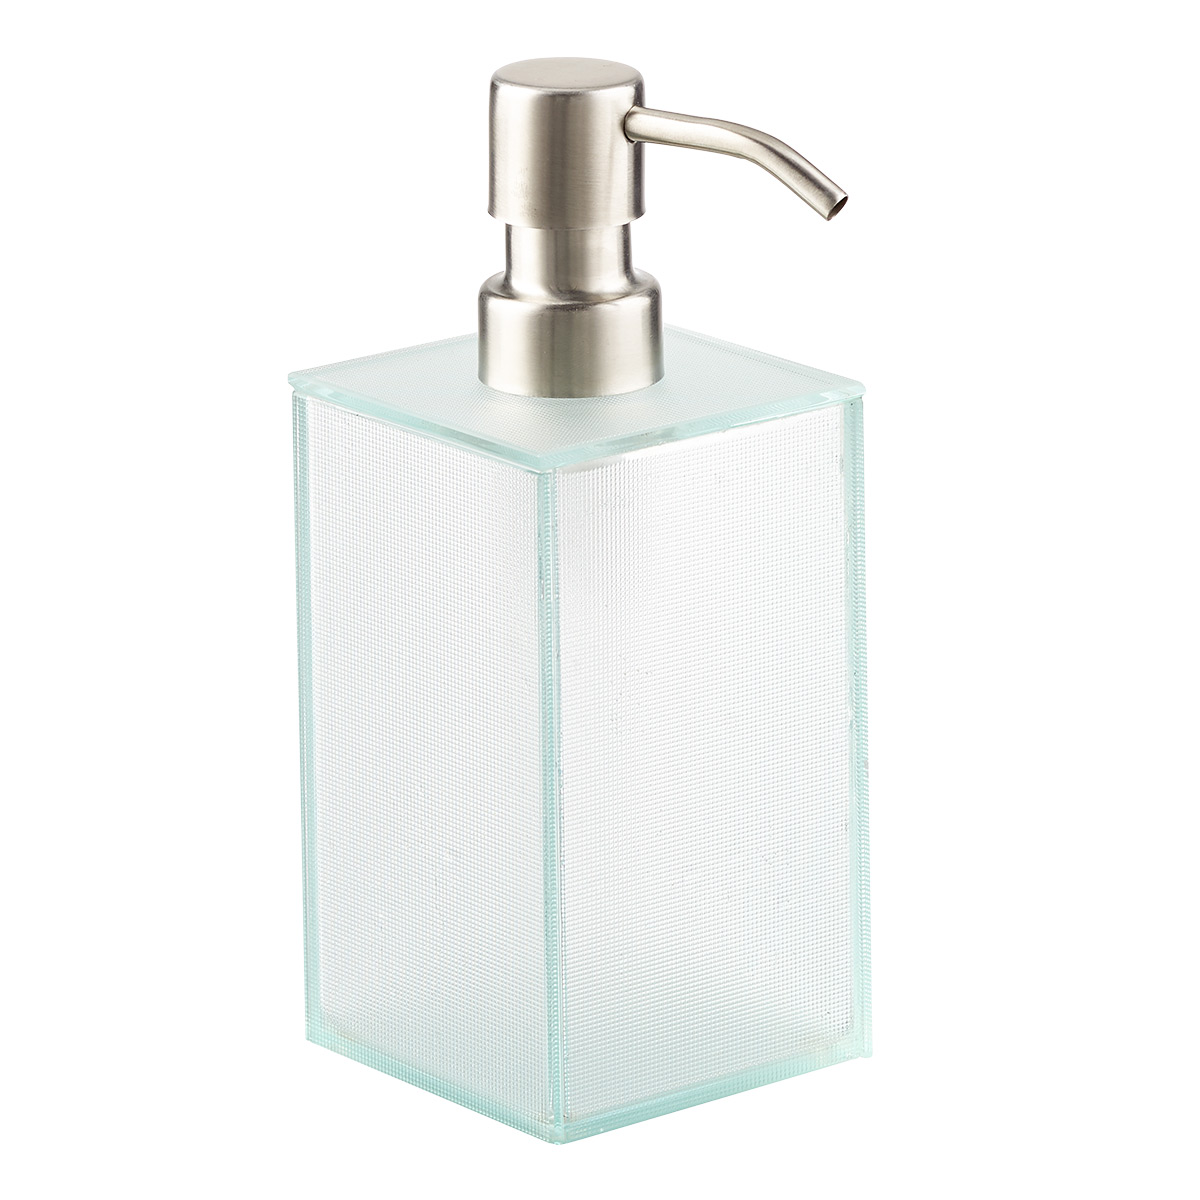 Design Ideas 15 oz. Dimpled Glass Soap Pump Clear